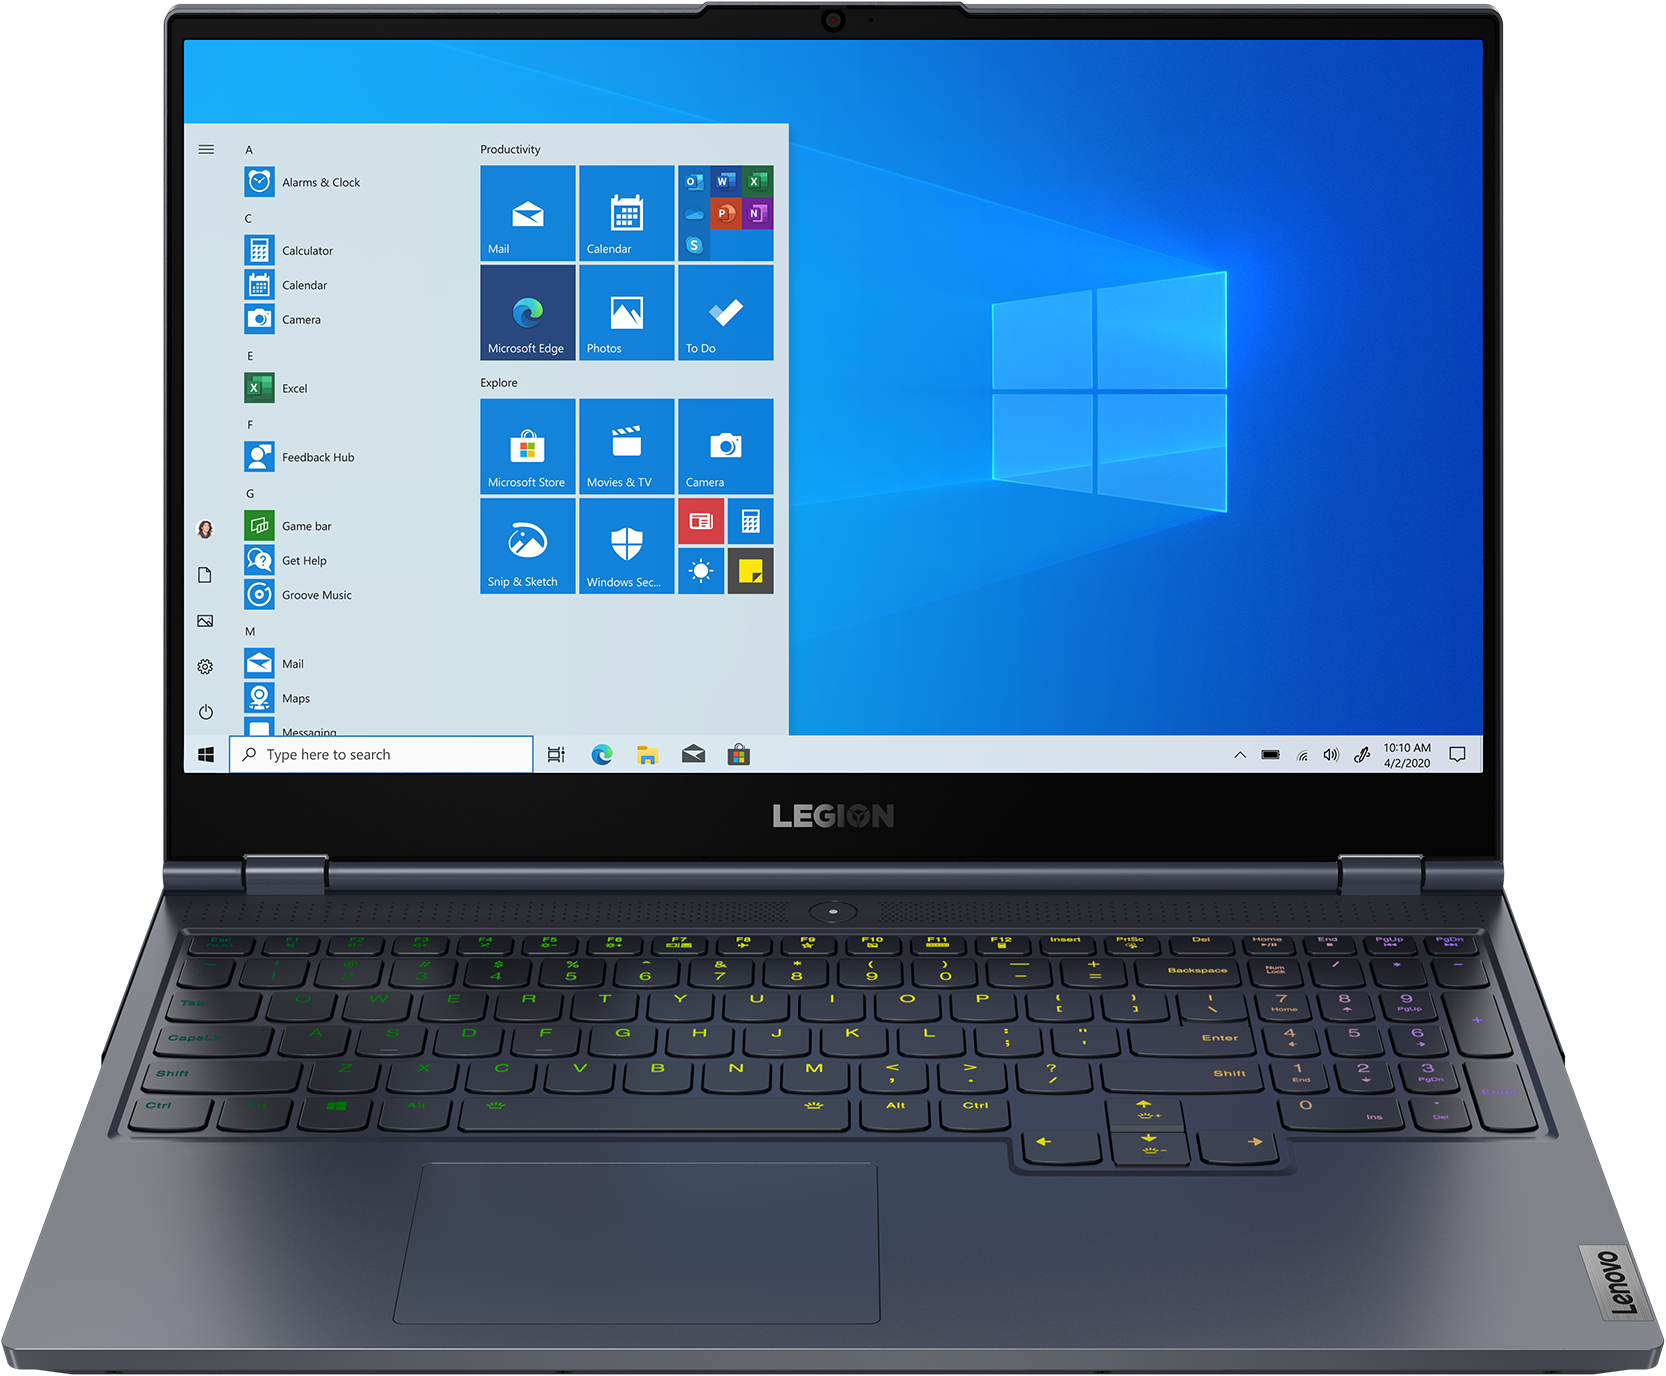 Legion 7 15″ Gaming Laptop with 15.6” FHD 240 Hz display, Intel Core i7-10750H  CPU, 32 GB DDR4  RAM, NVIDIA GeForce RTX 2070 8 GB  GPU, 1 TB SSD, 1 Thunderbolt port